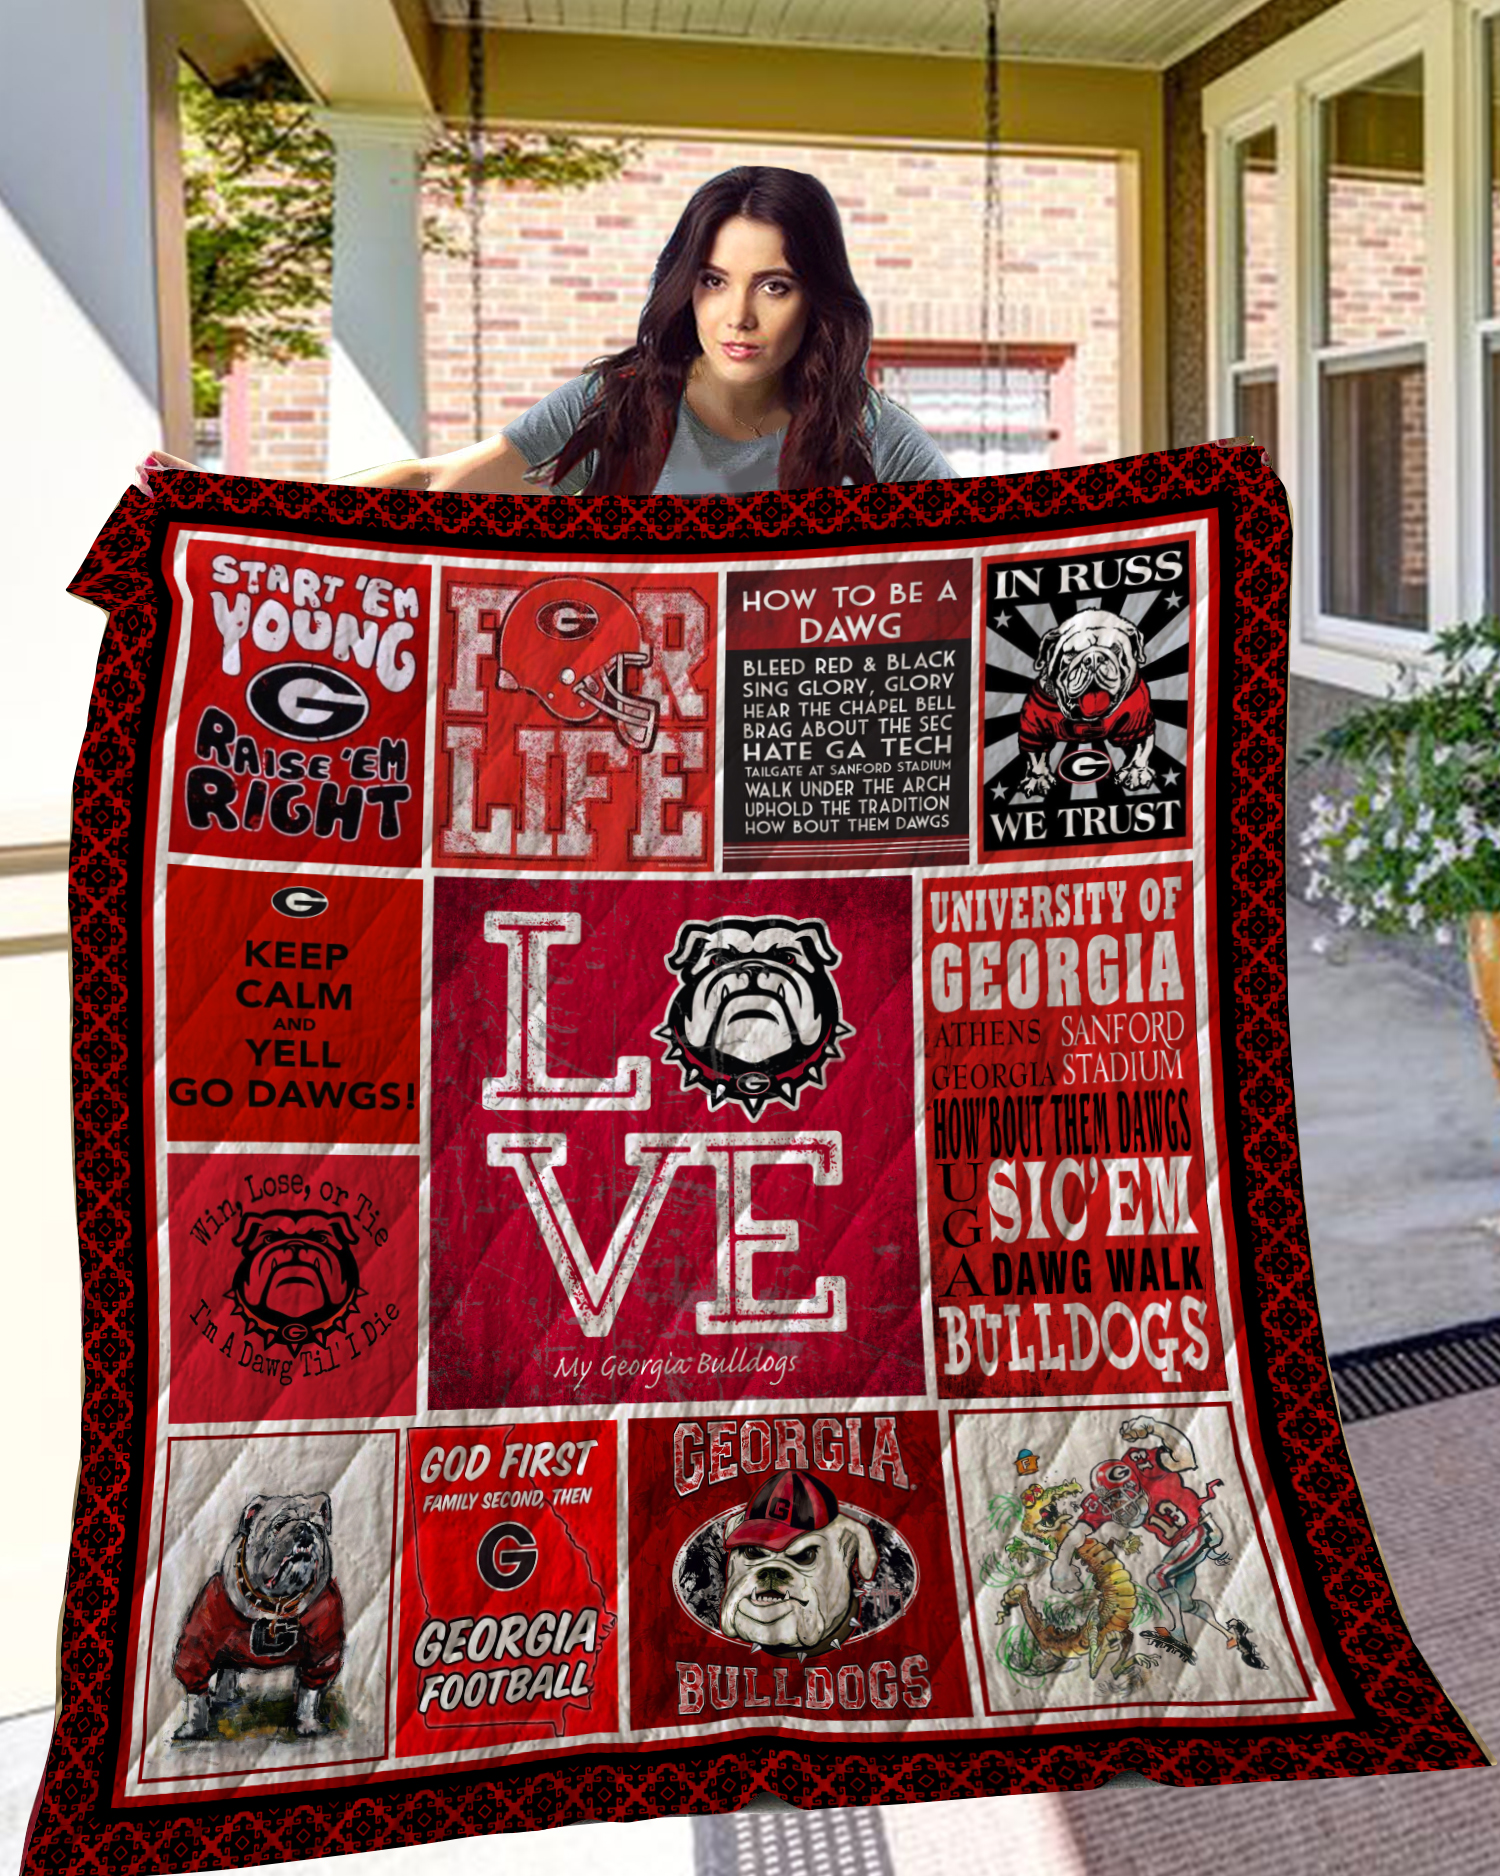 Georgia bulldogs blanket